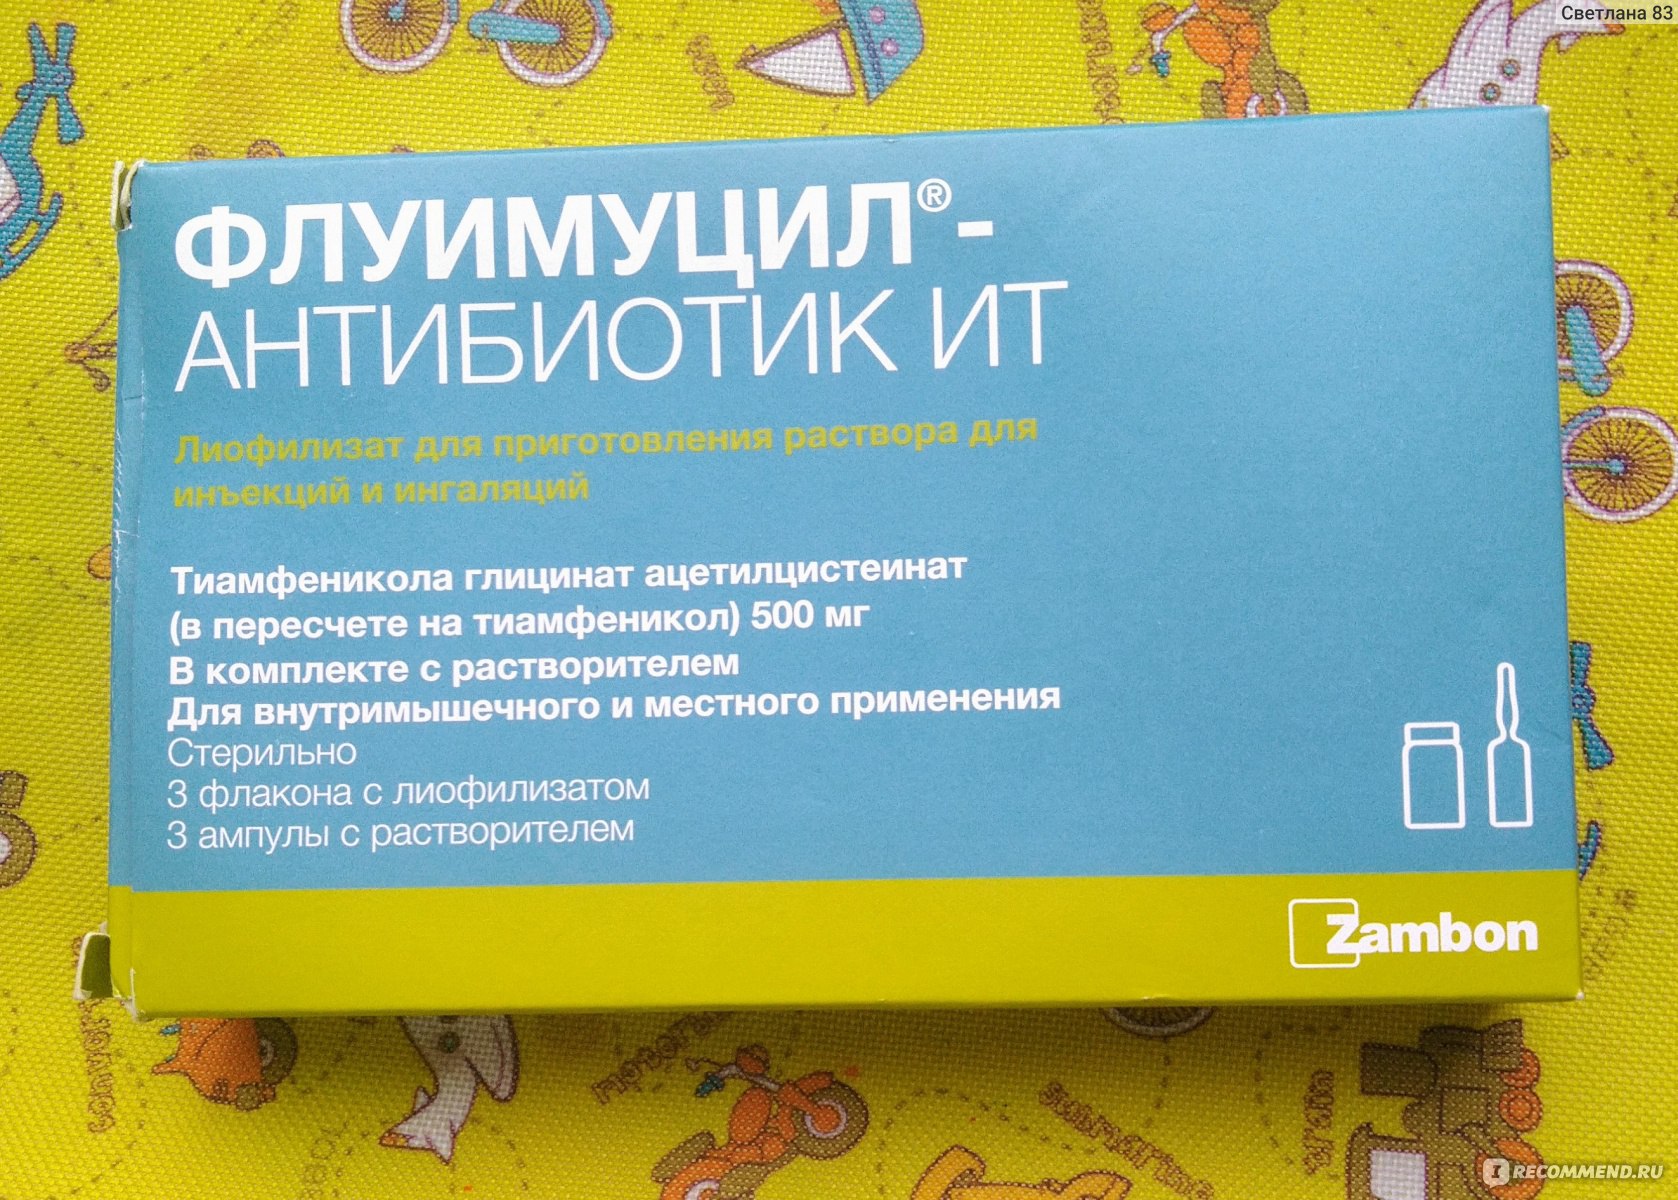 Антибиотик Zambon Флуимуцил-антибиотик ИТ (для ингаляций) фото